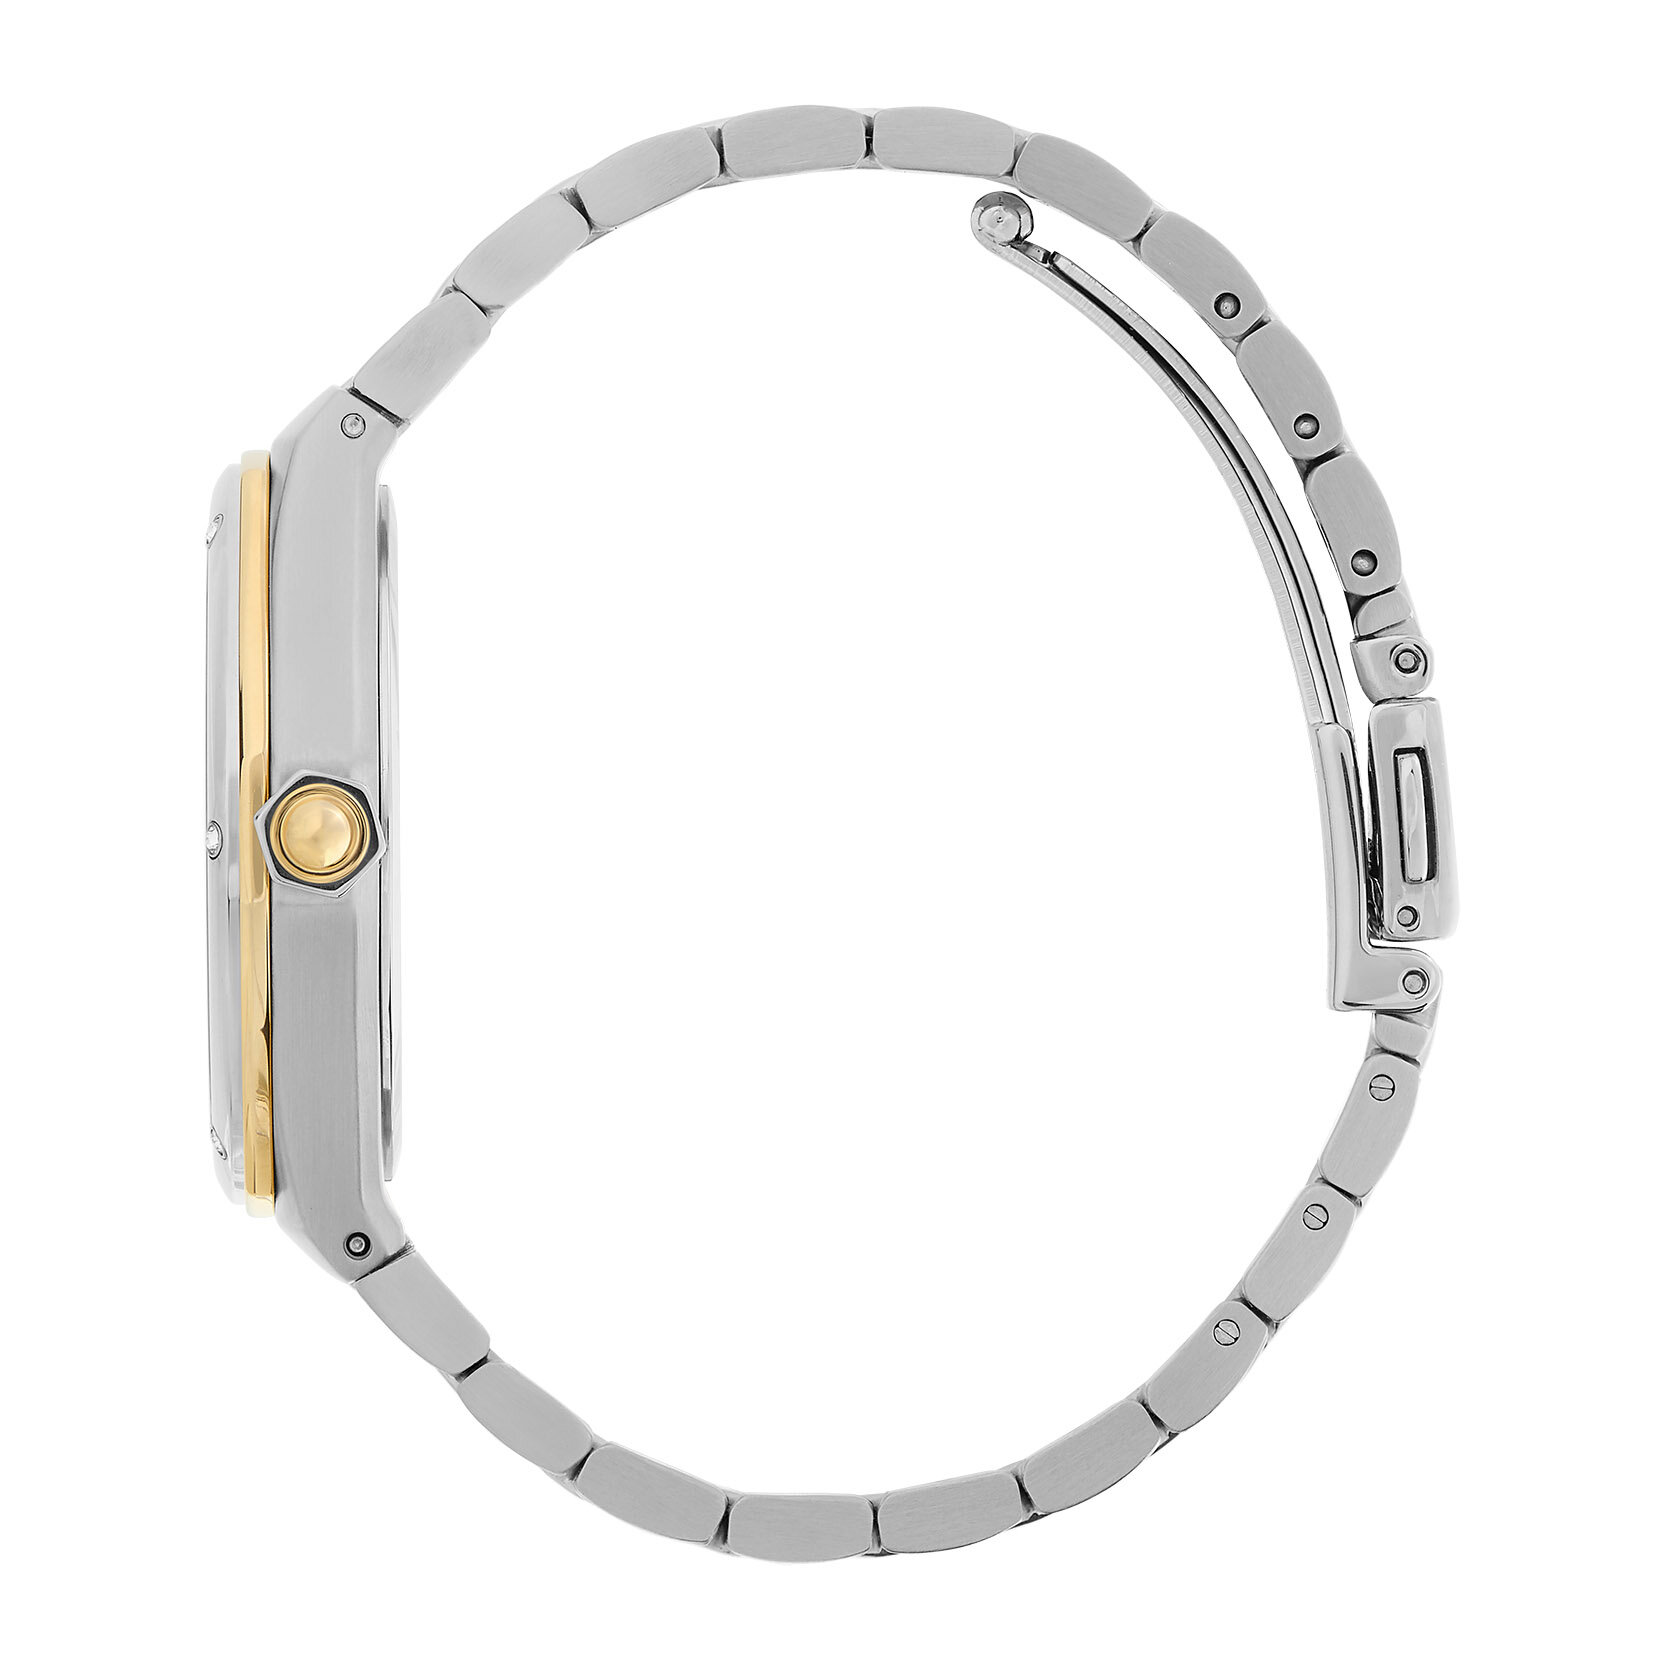 33mm Hexa White, Gold & Silver Bracelet Watch